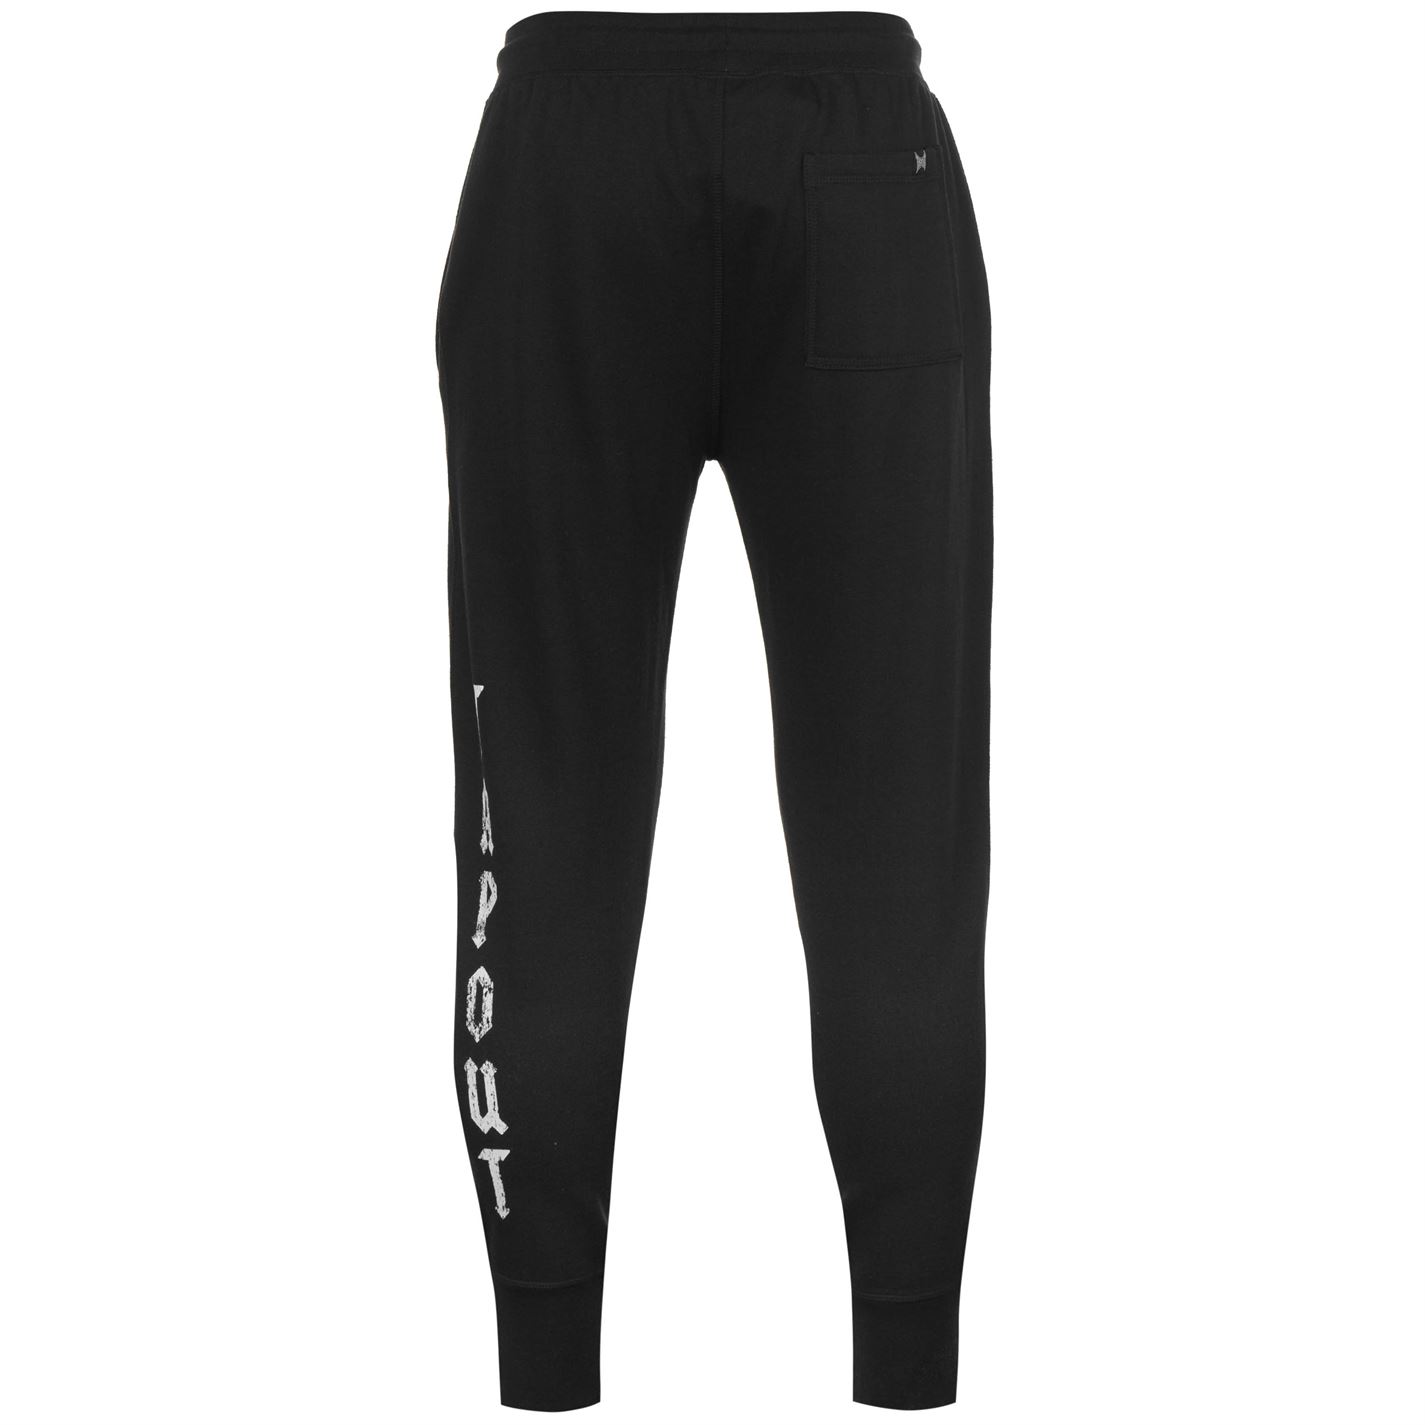 Pantaloni jogging Tapout Core pentru Barbati negru